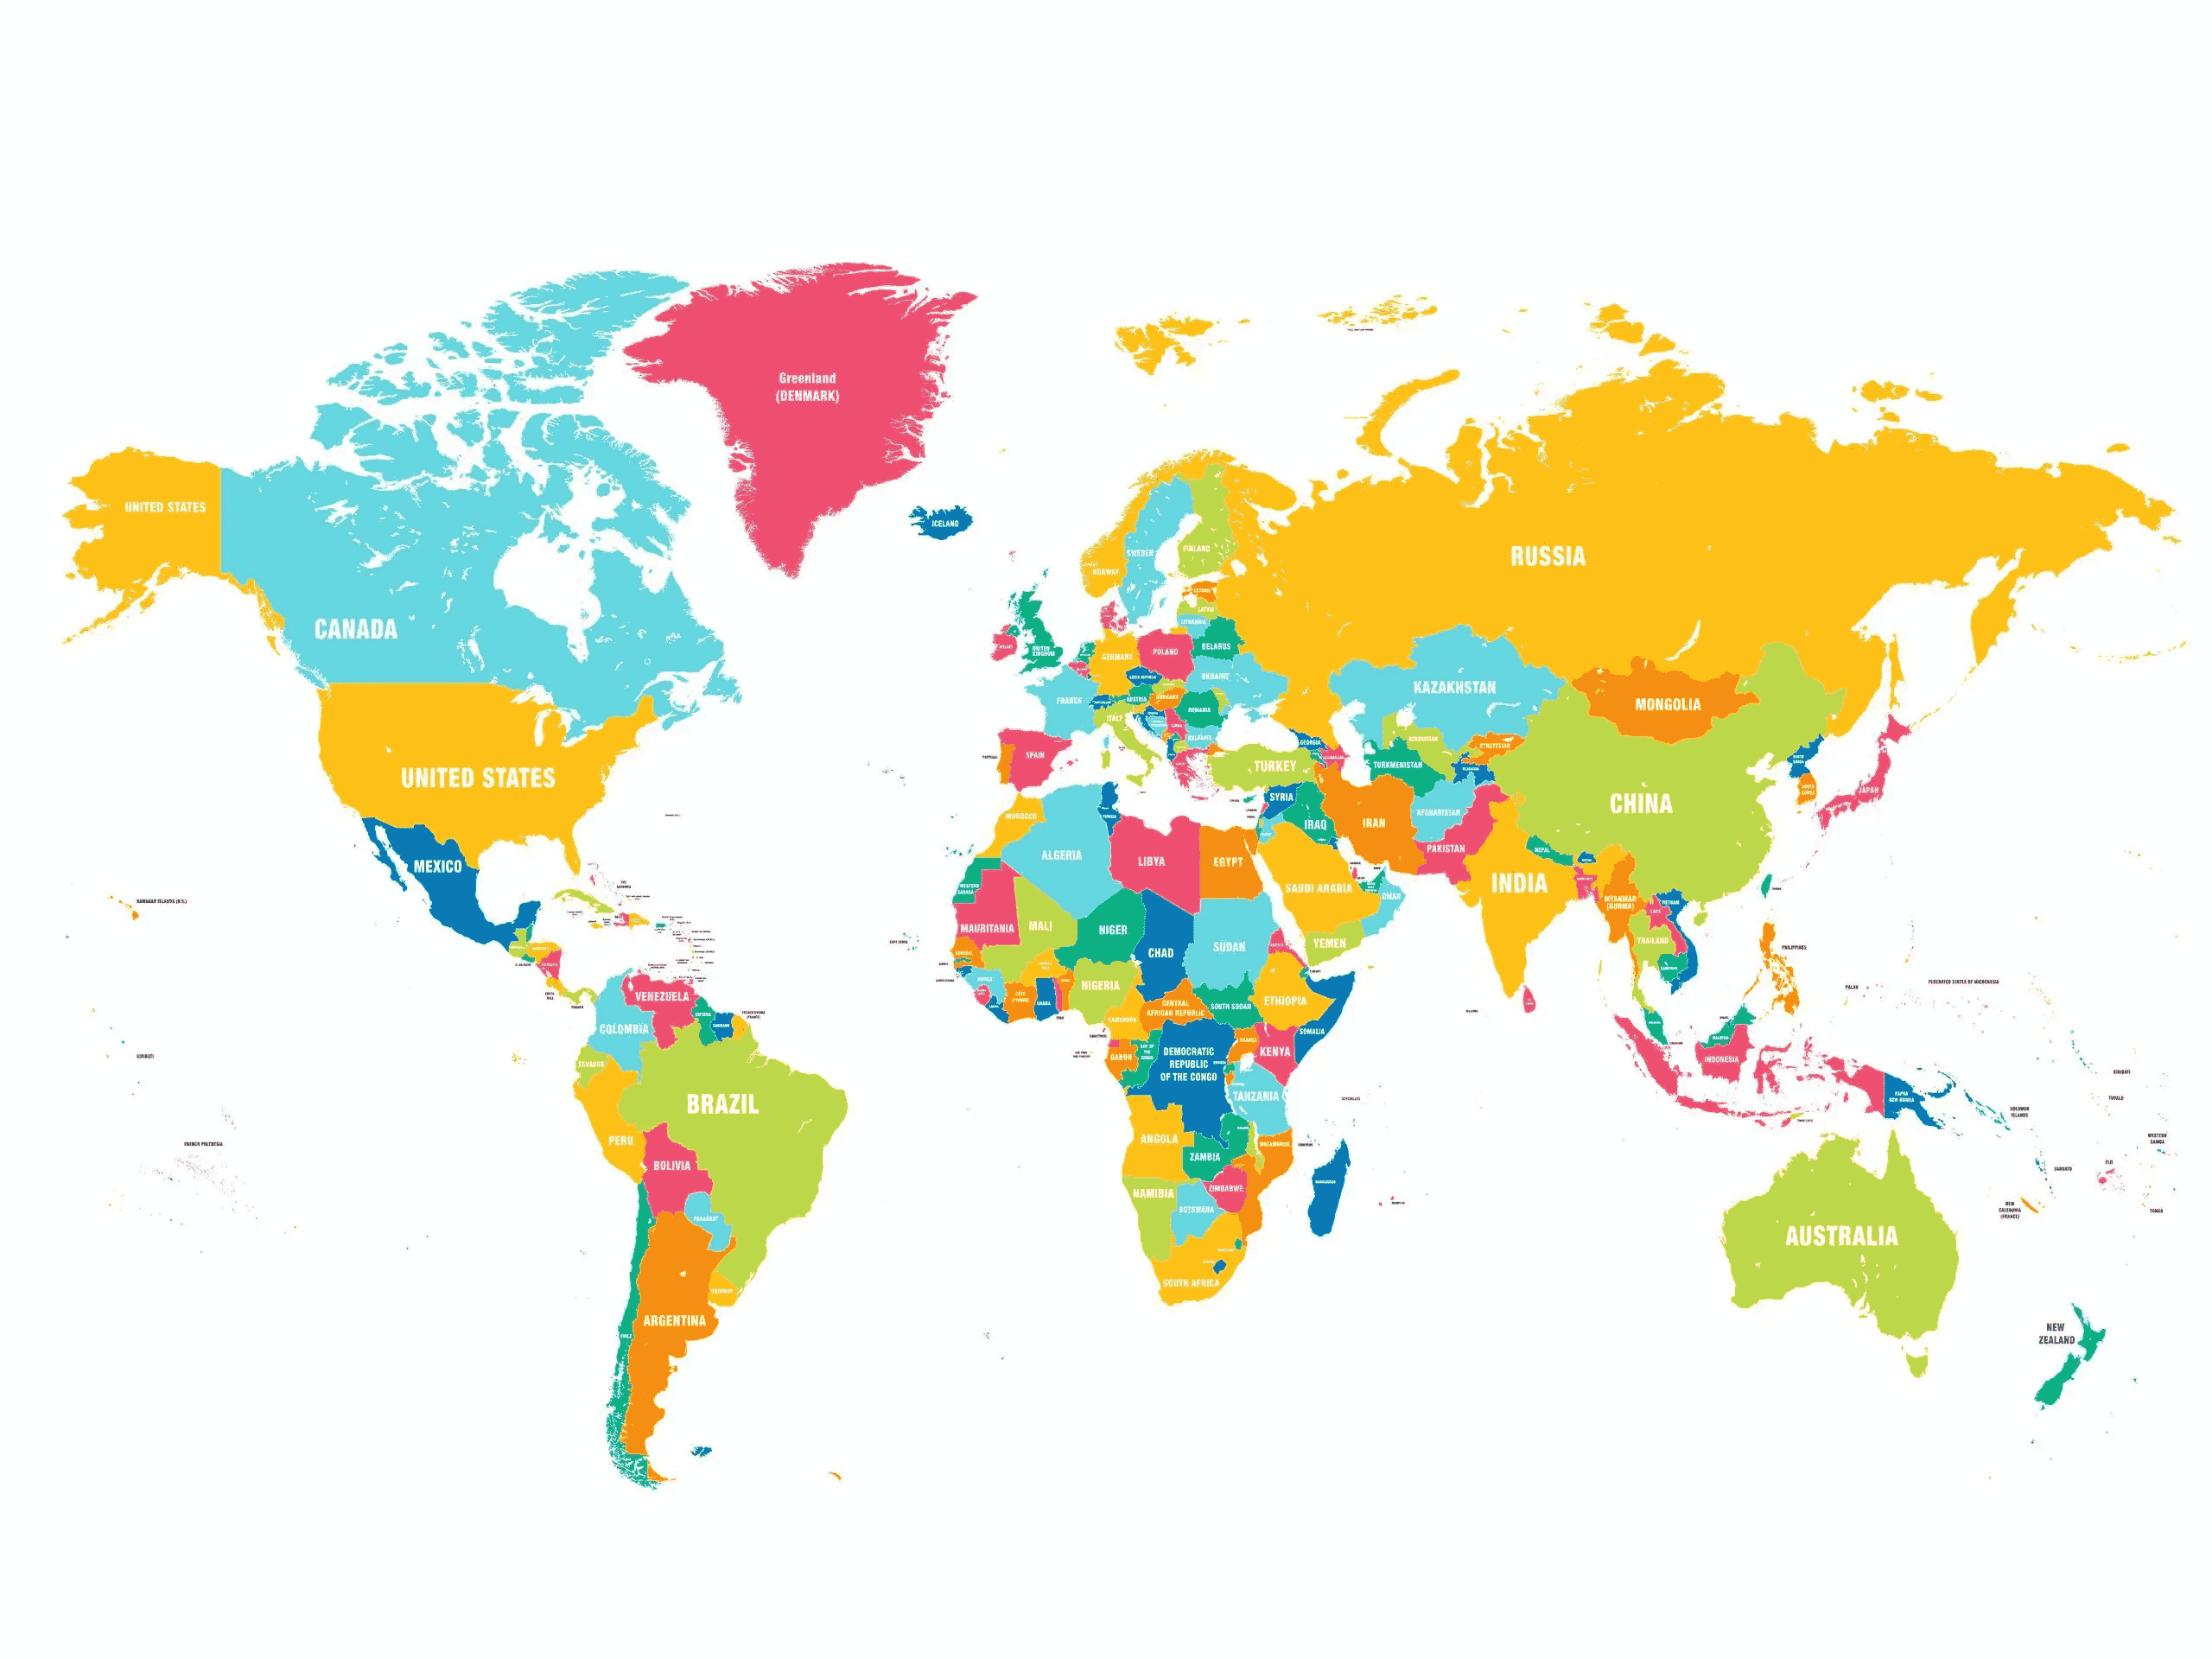 World map Image 8 x 6_aa - Copy (1)